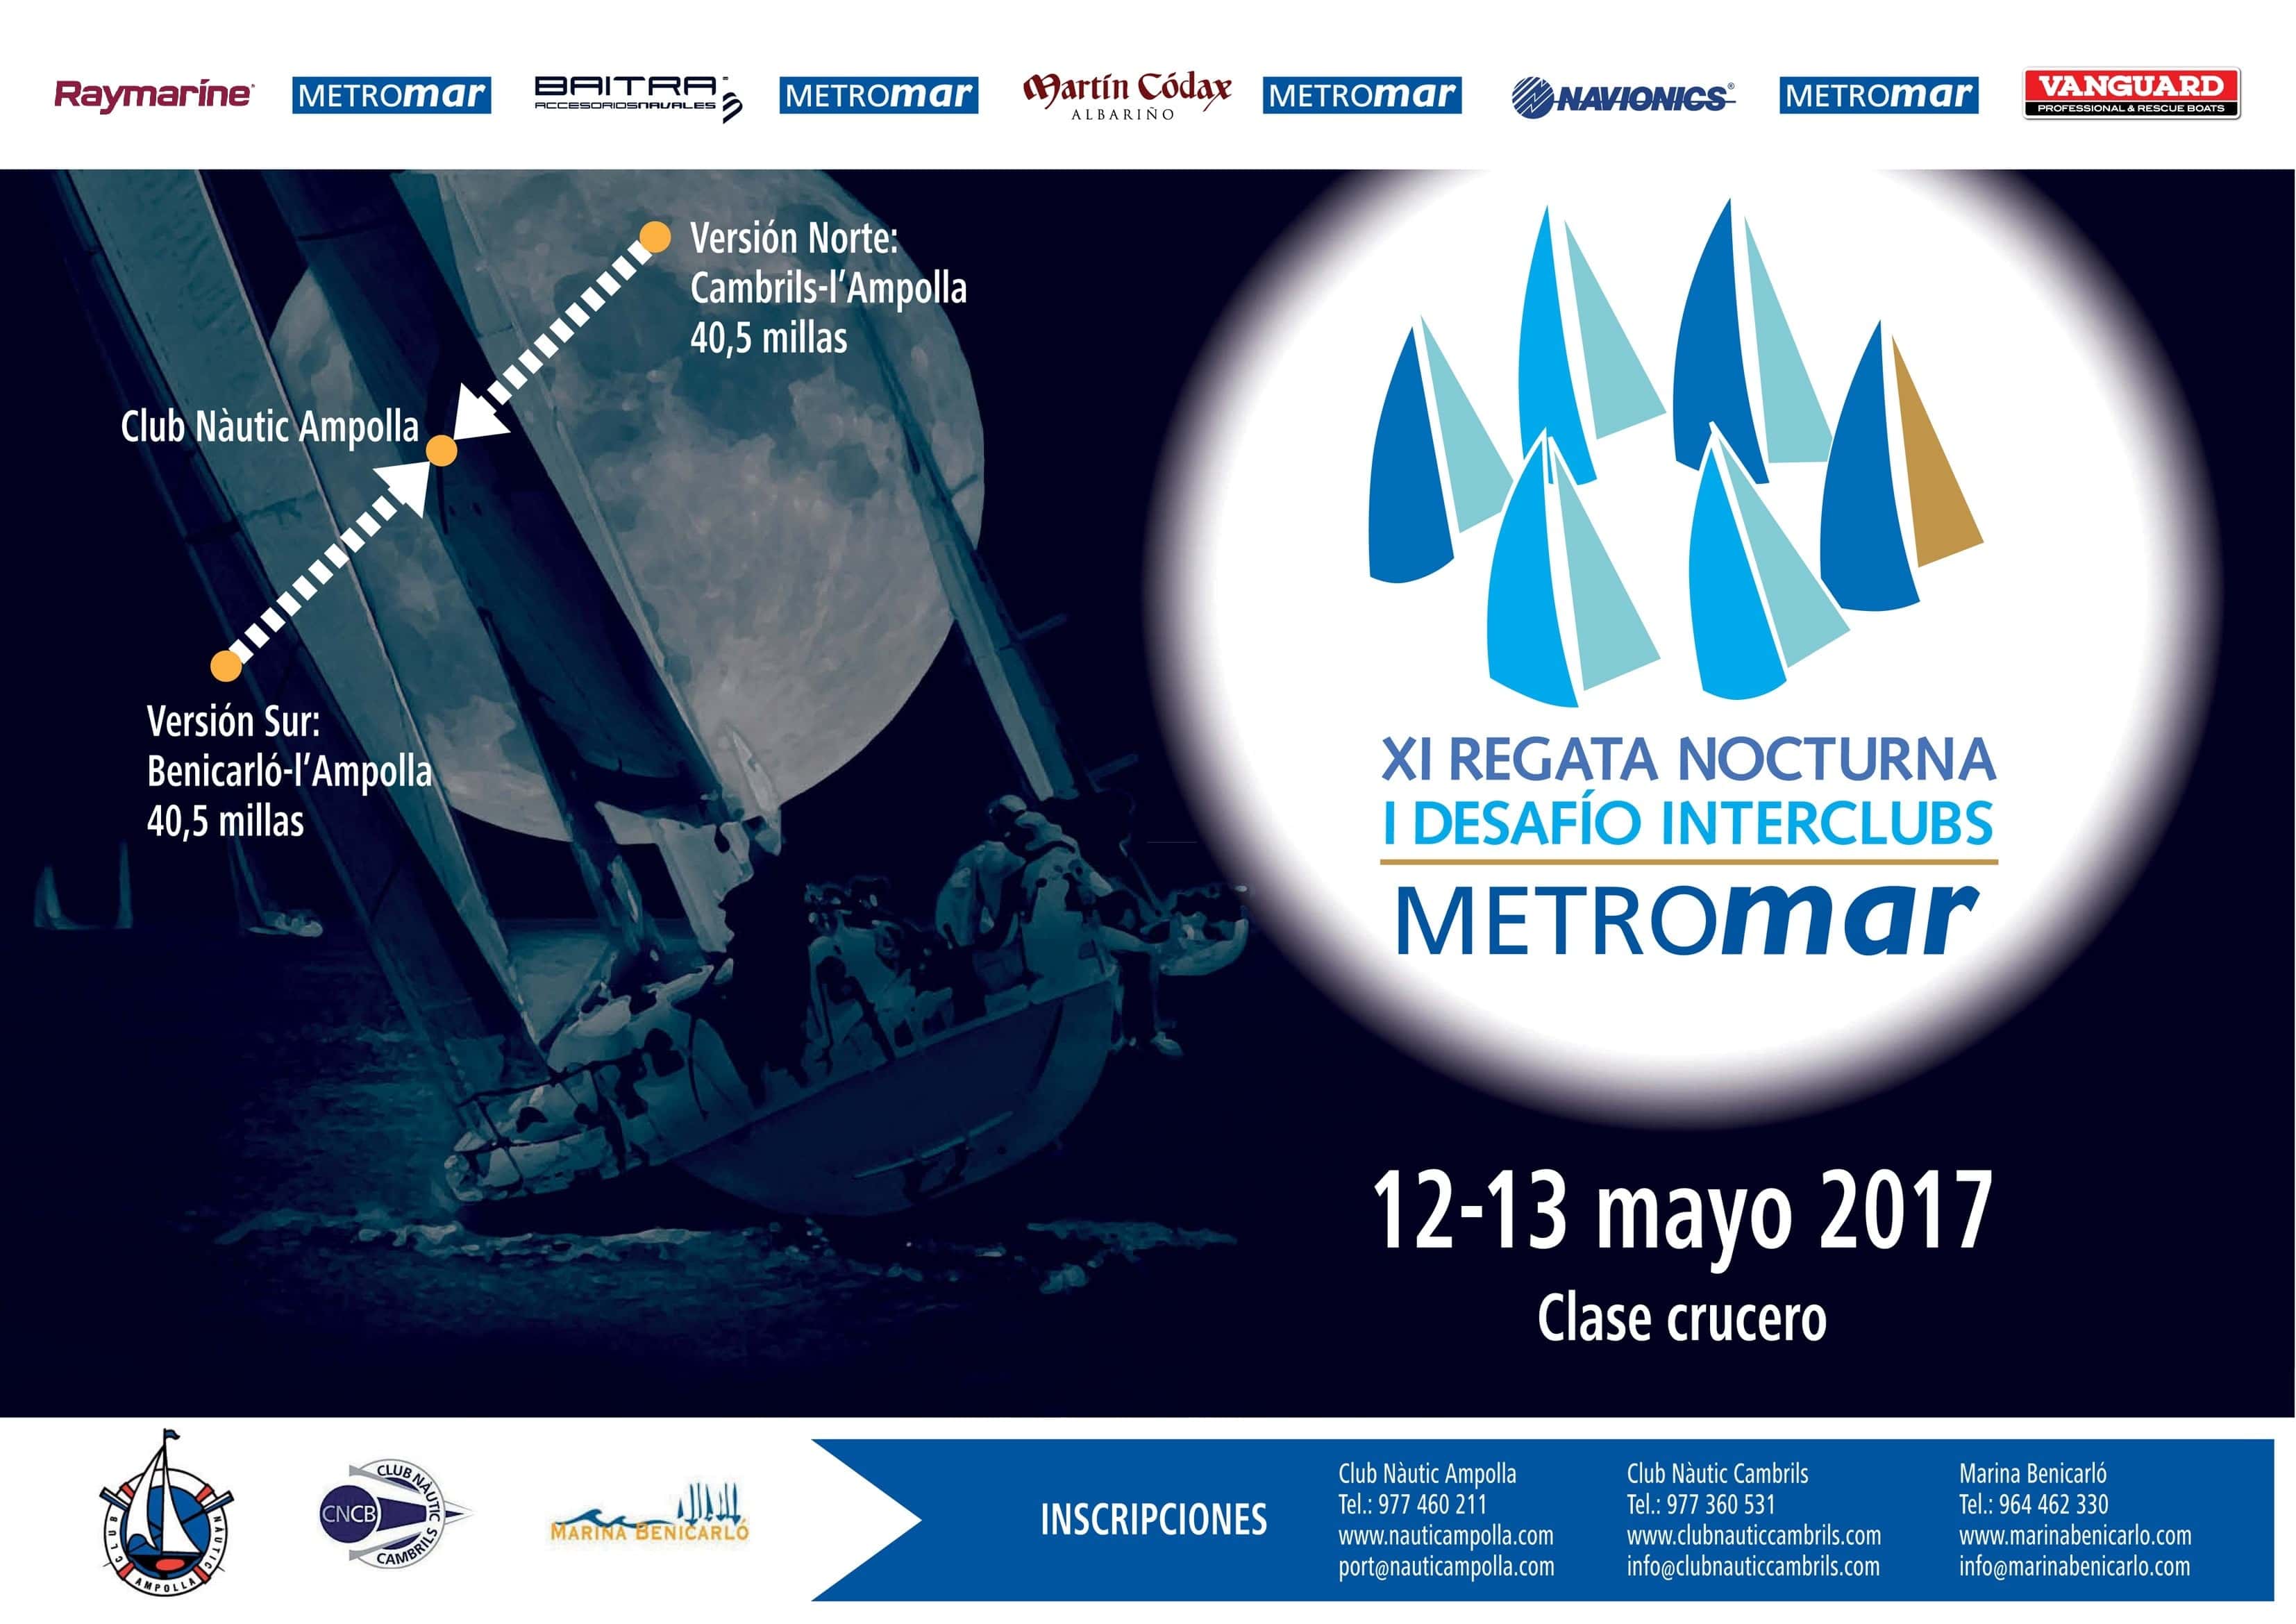  Cartel anunciador de la Regata Nocturna Metromar